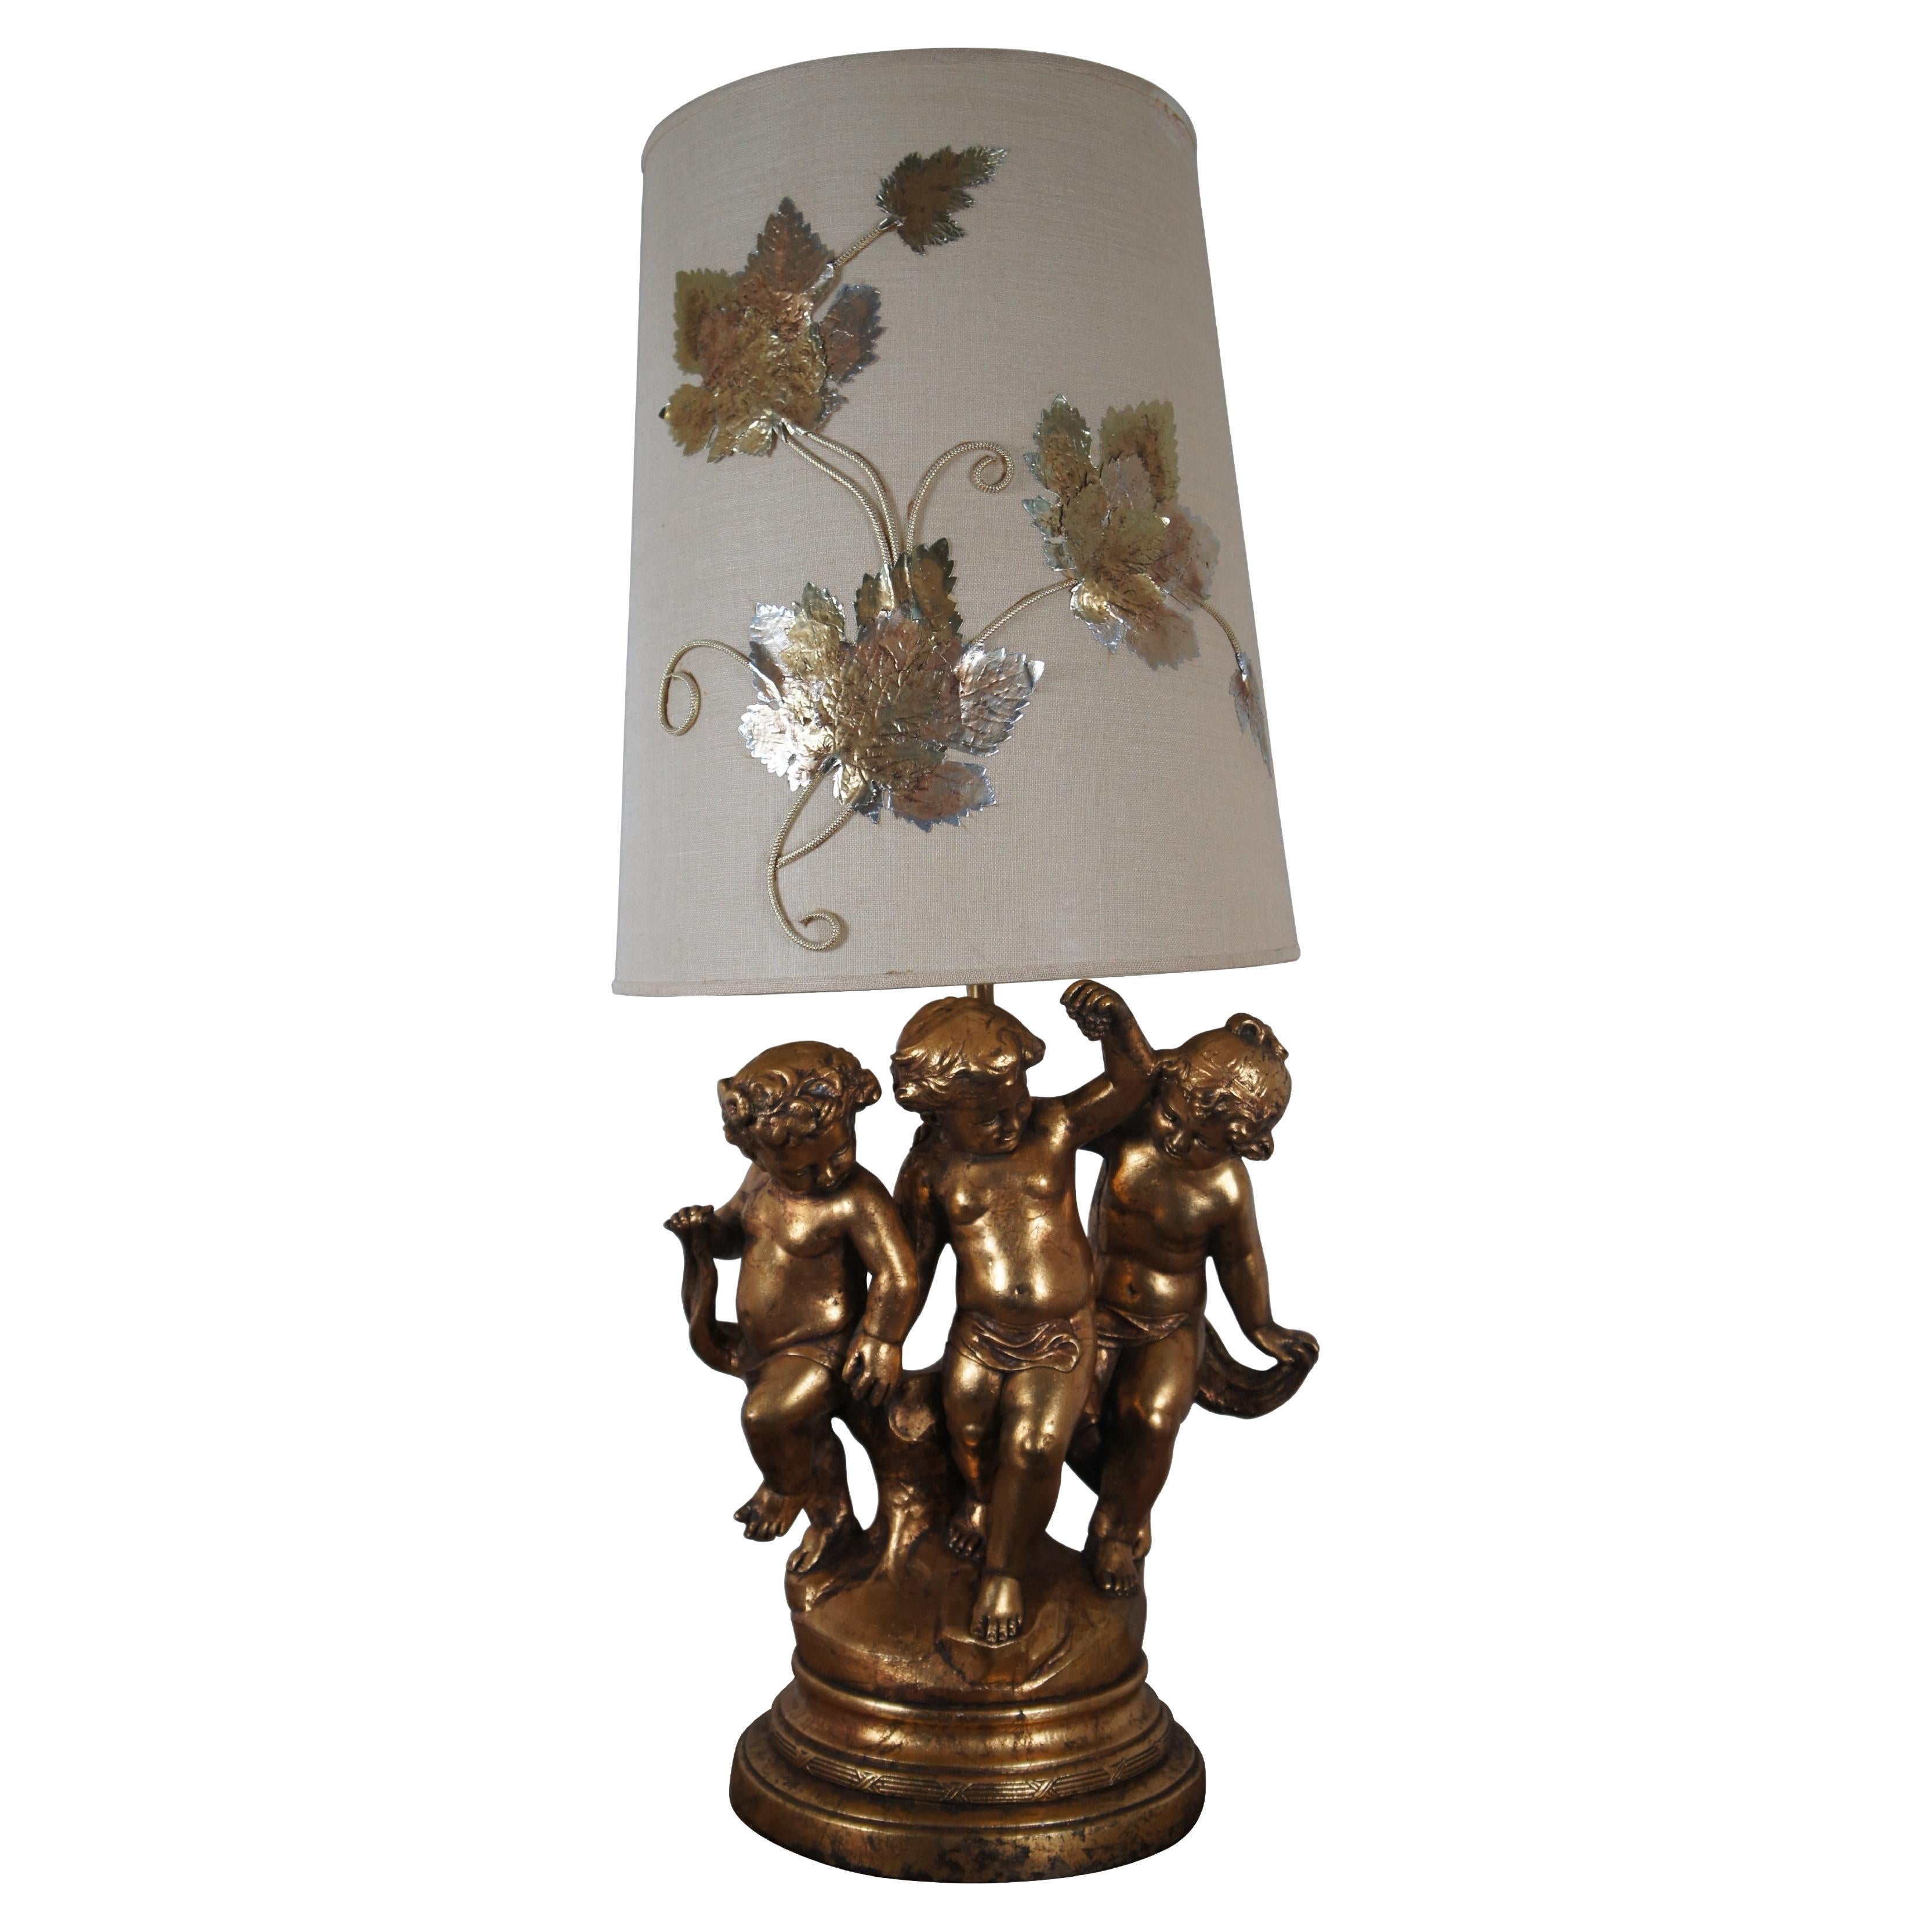 Midcentury Neoclassical Hollywood Regency Gold Cherubs Putti Lamp